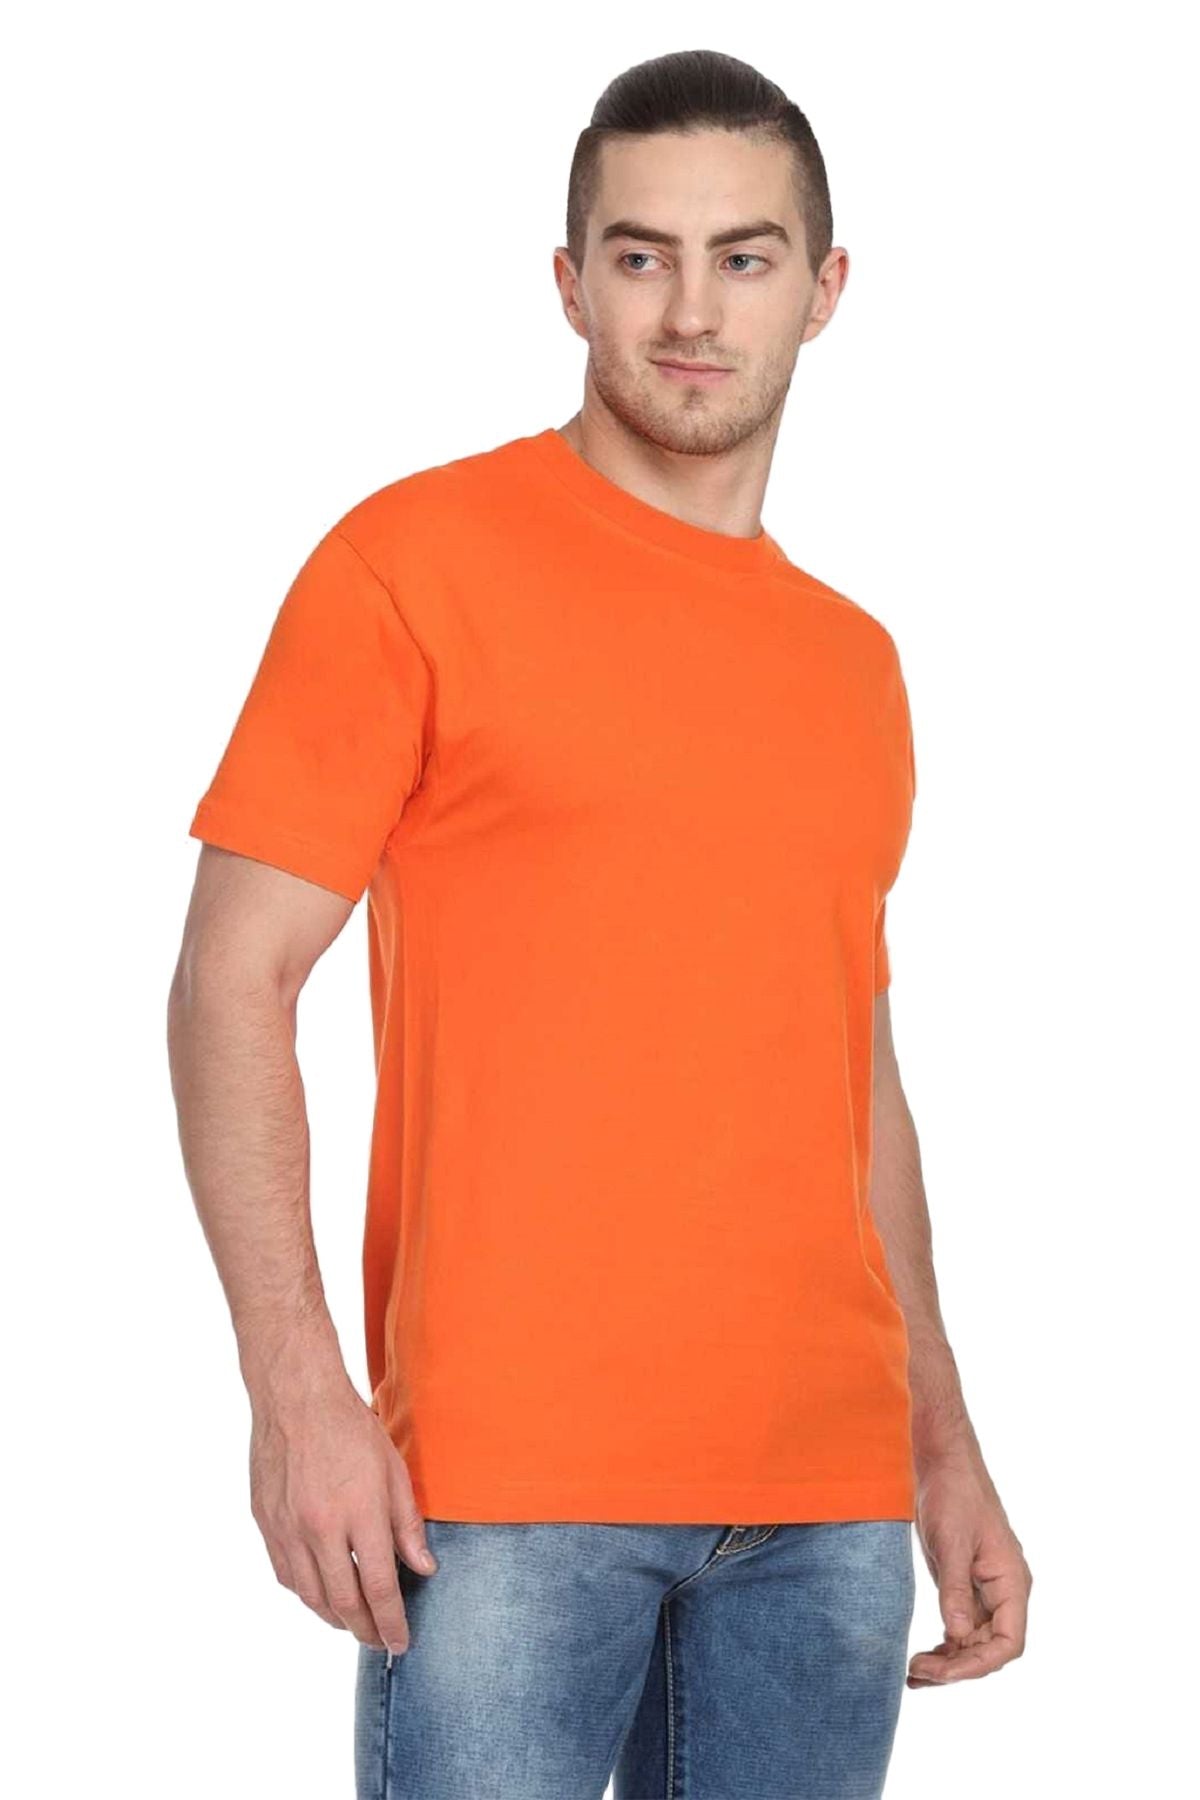 Multus  Mens Solid Round Neck Polyester White T-shirt Pack Of 2  Yellow  Orange